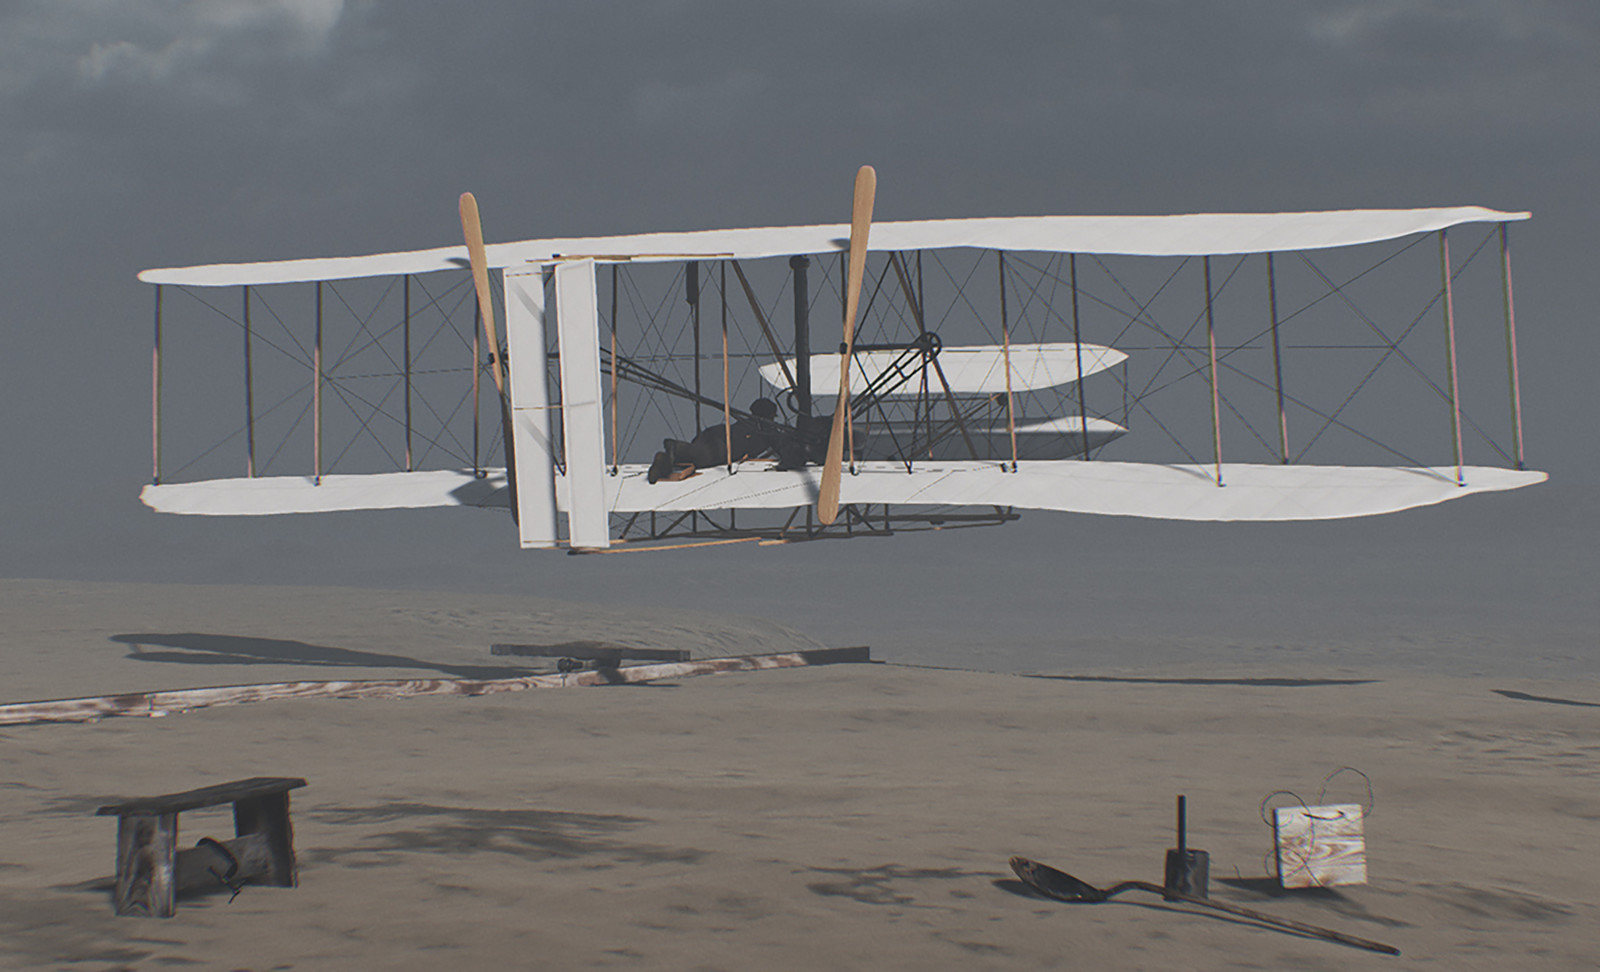 Wright Flyer for CGO Studios "First". © CGO Studios